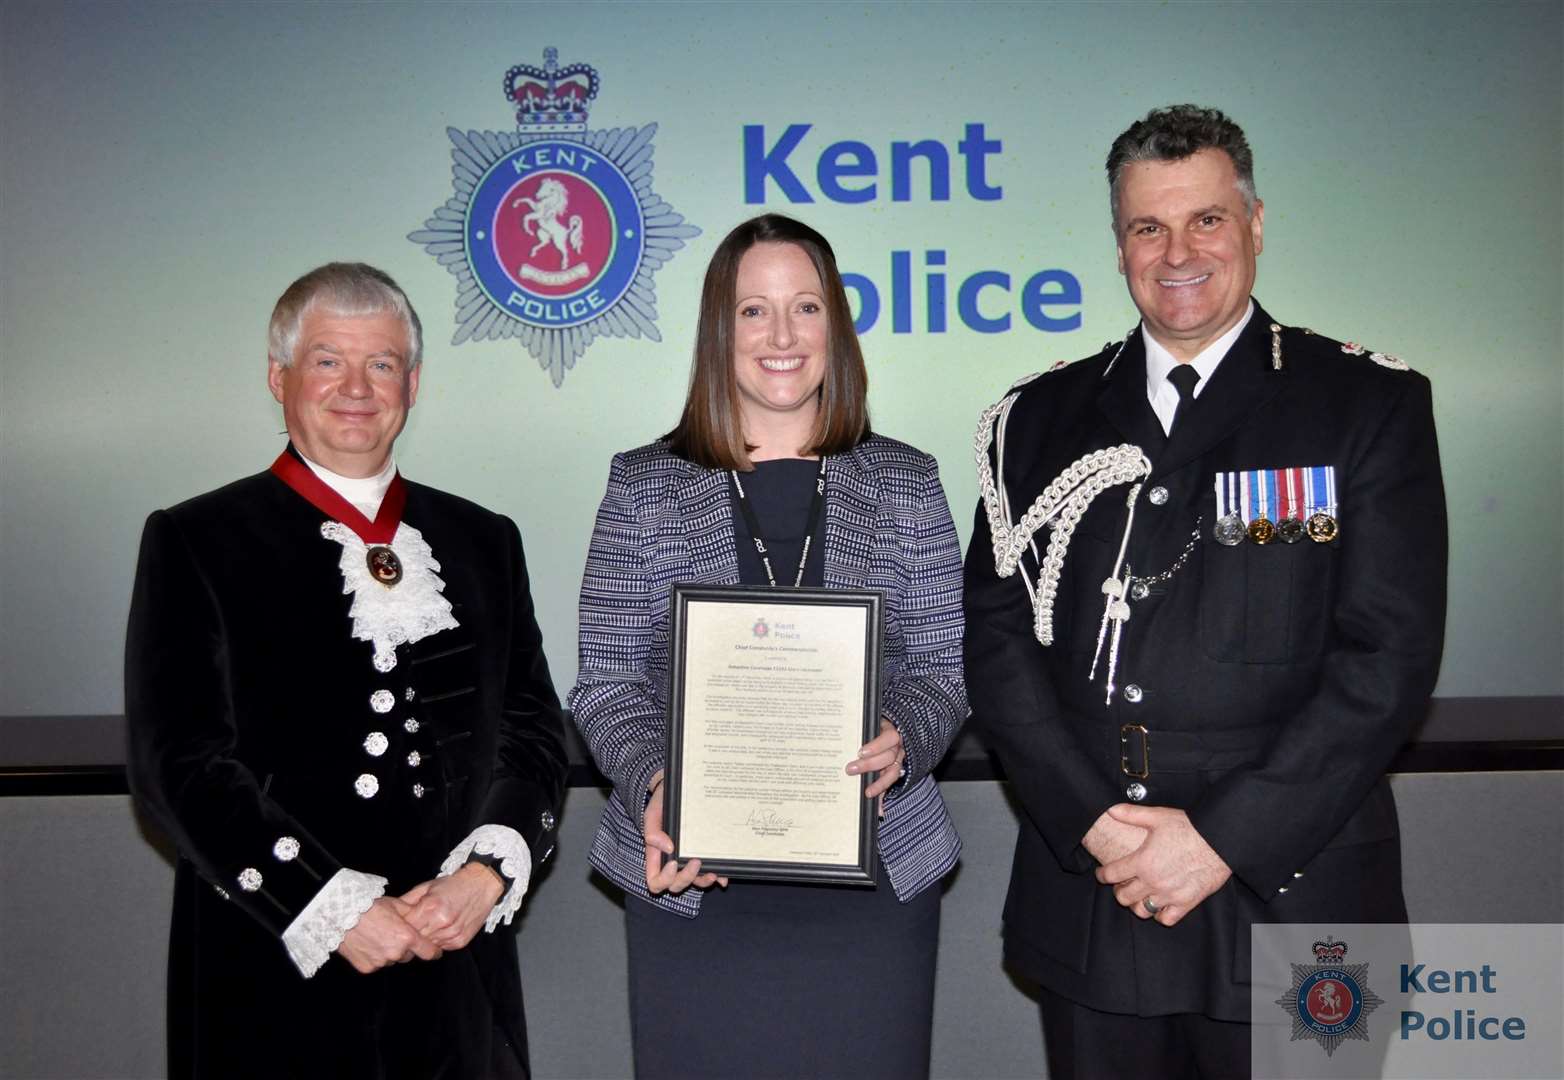 DC Lockwood receiving her honour at Kent Police College in Maidstone